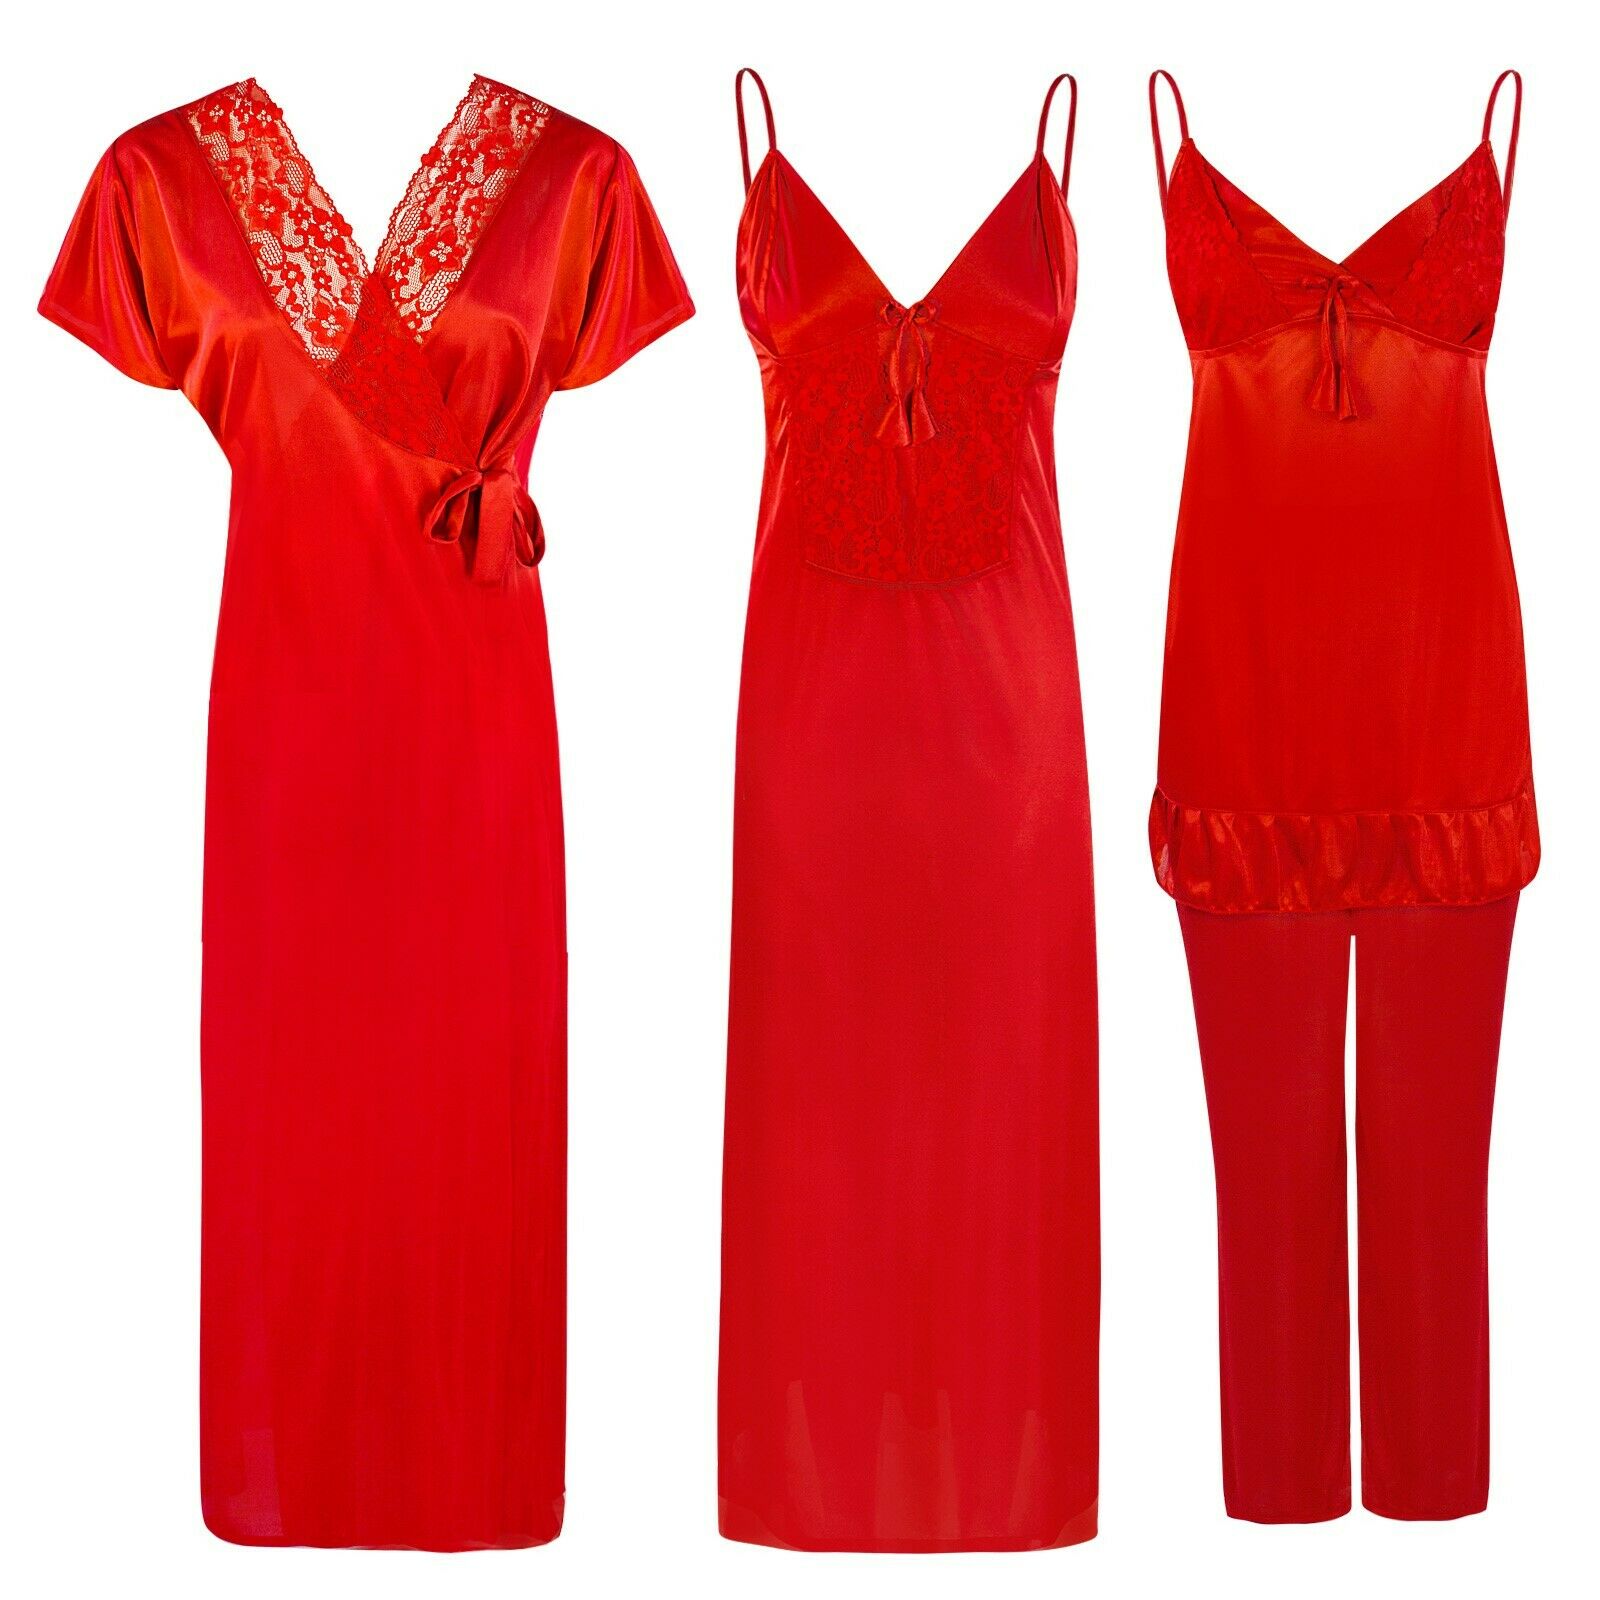 Red / One Size Satin 3 Pcs Nightwear Set The Orange Tags